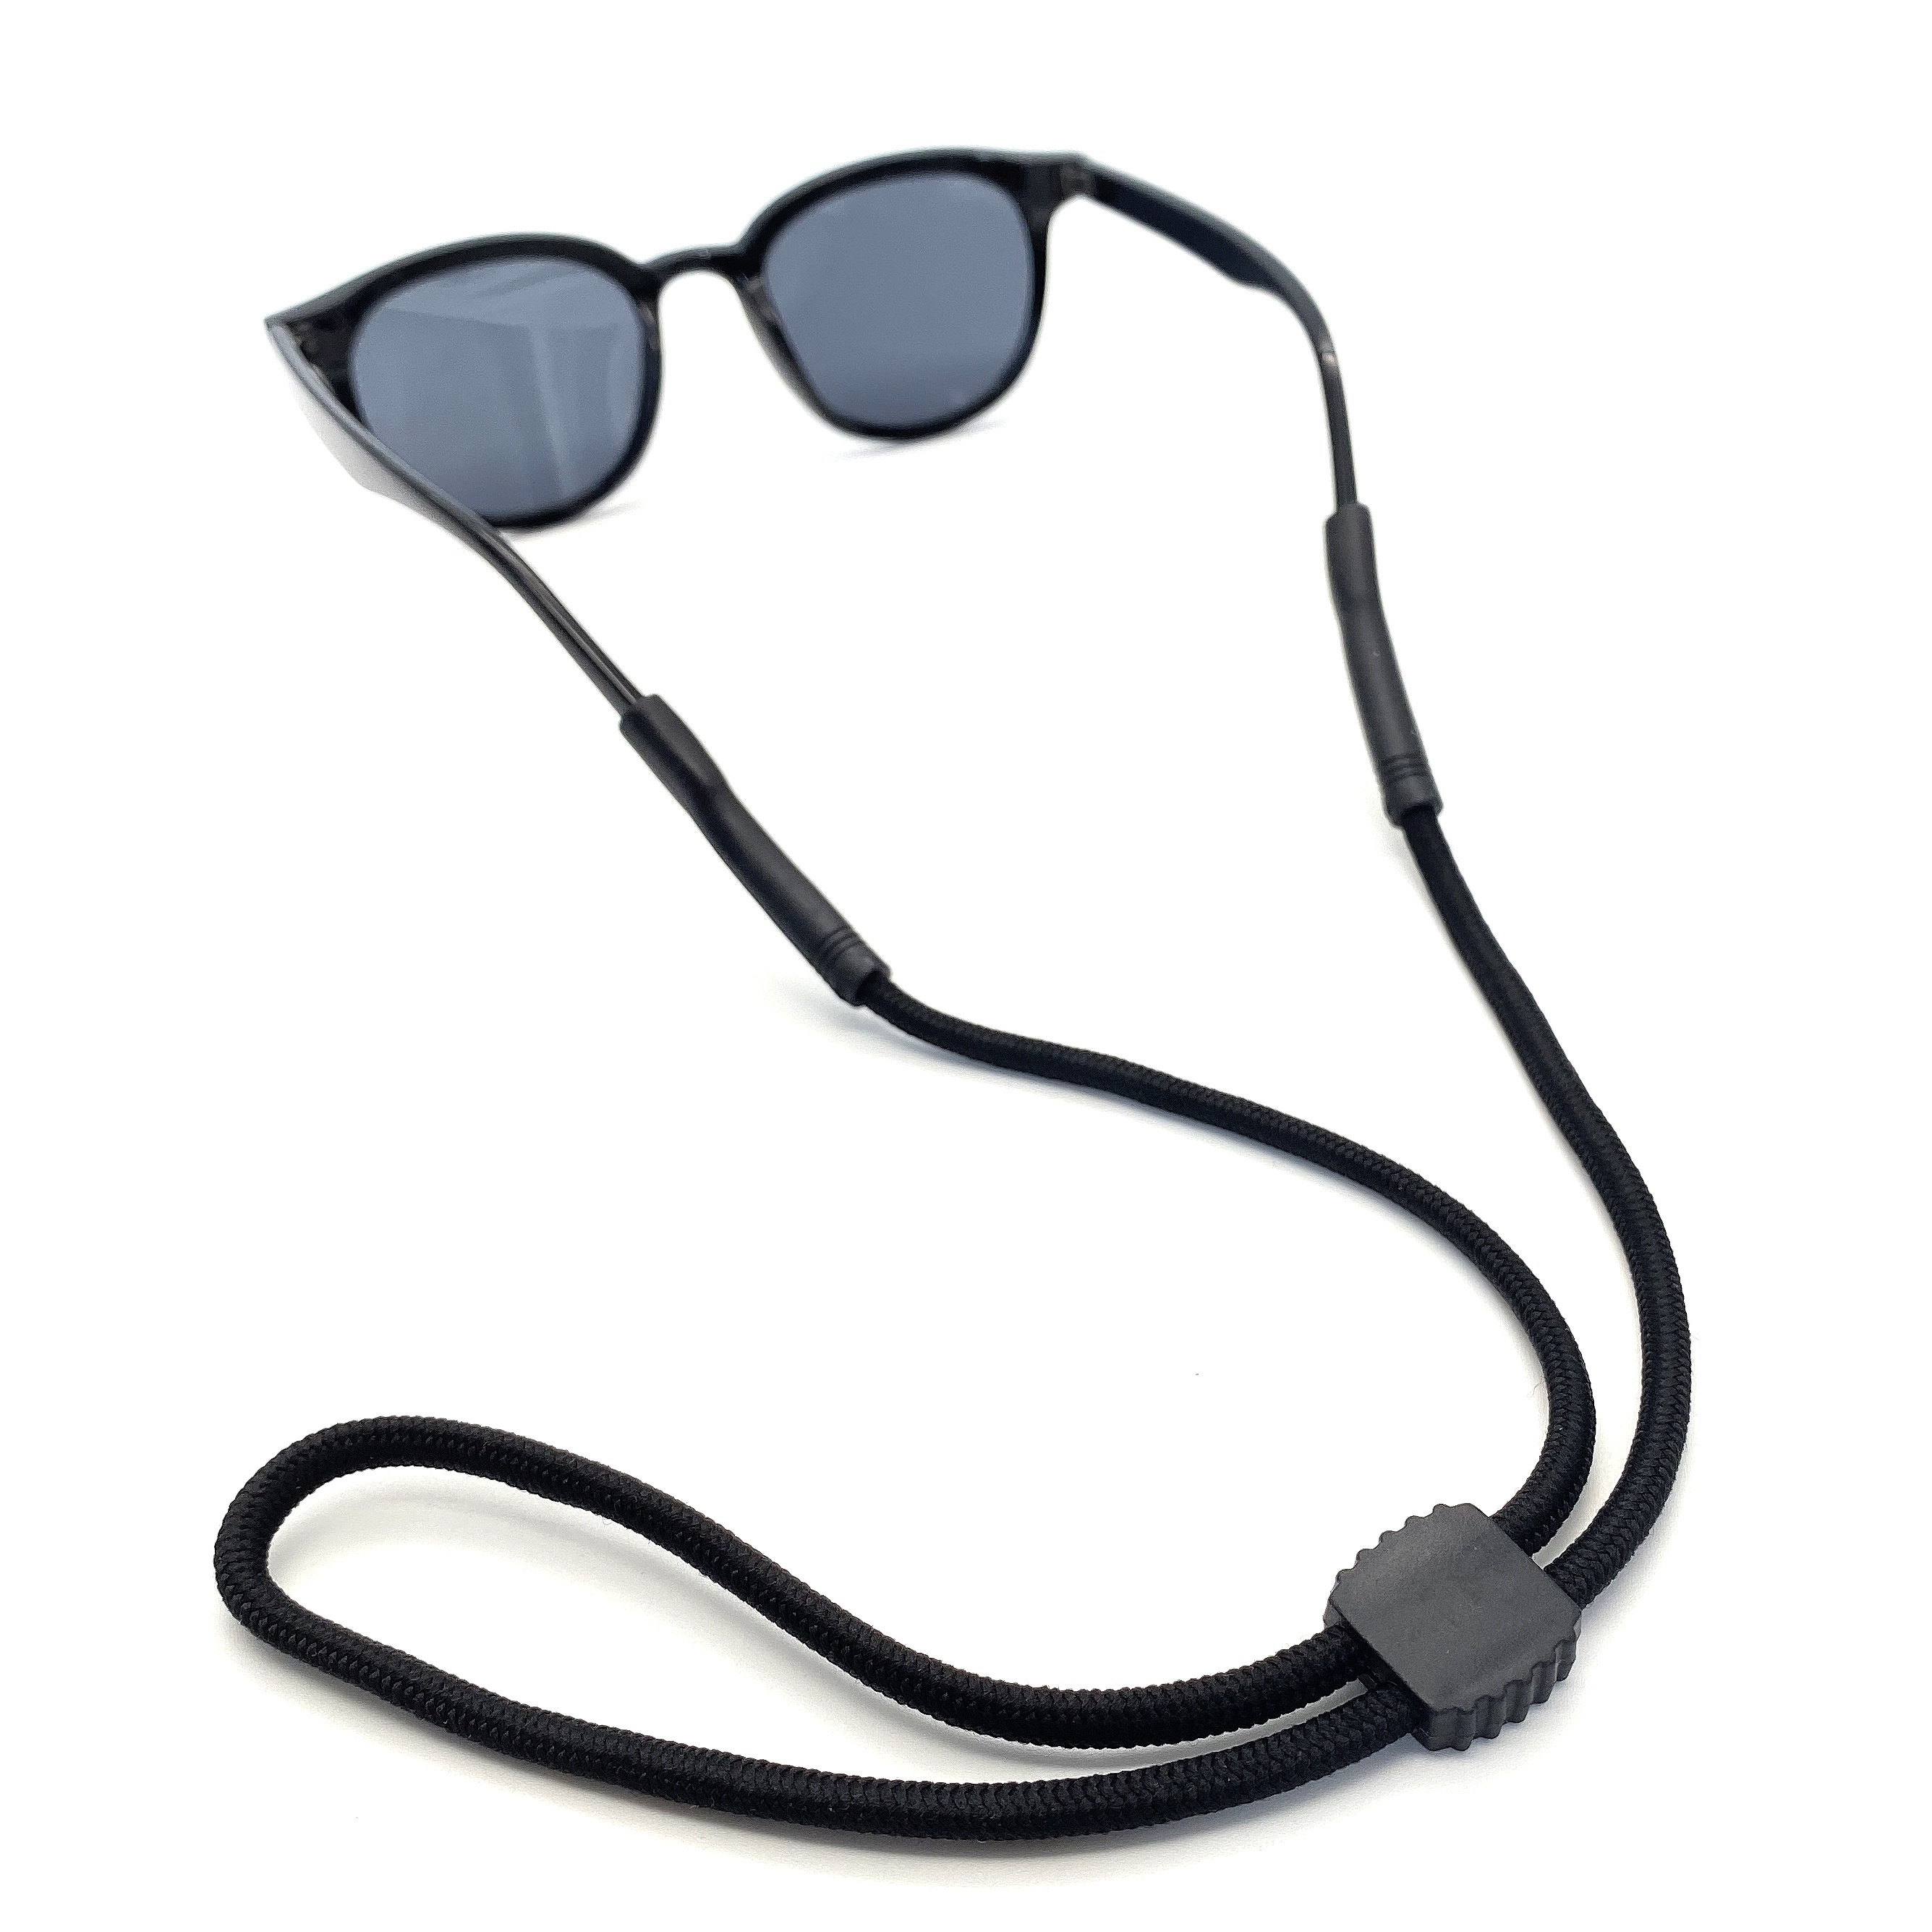 3pcs Fashion Reading Glasses Chain For Women Metal Sunglasses